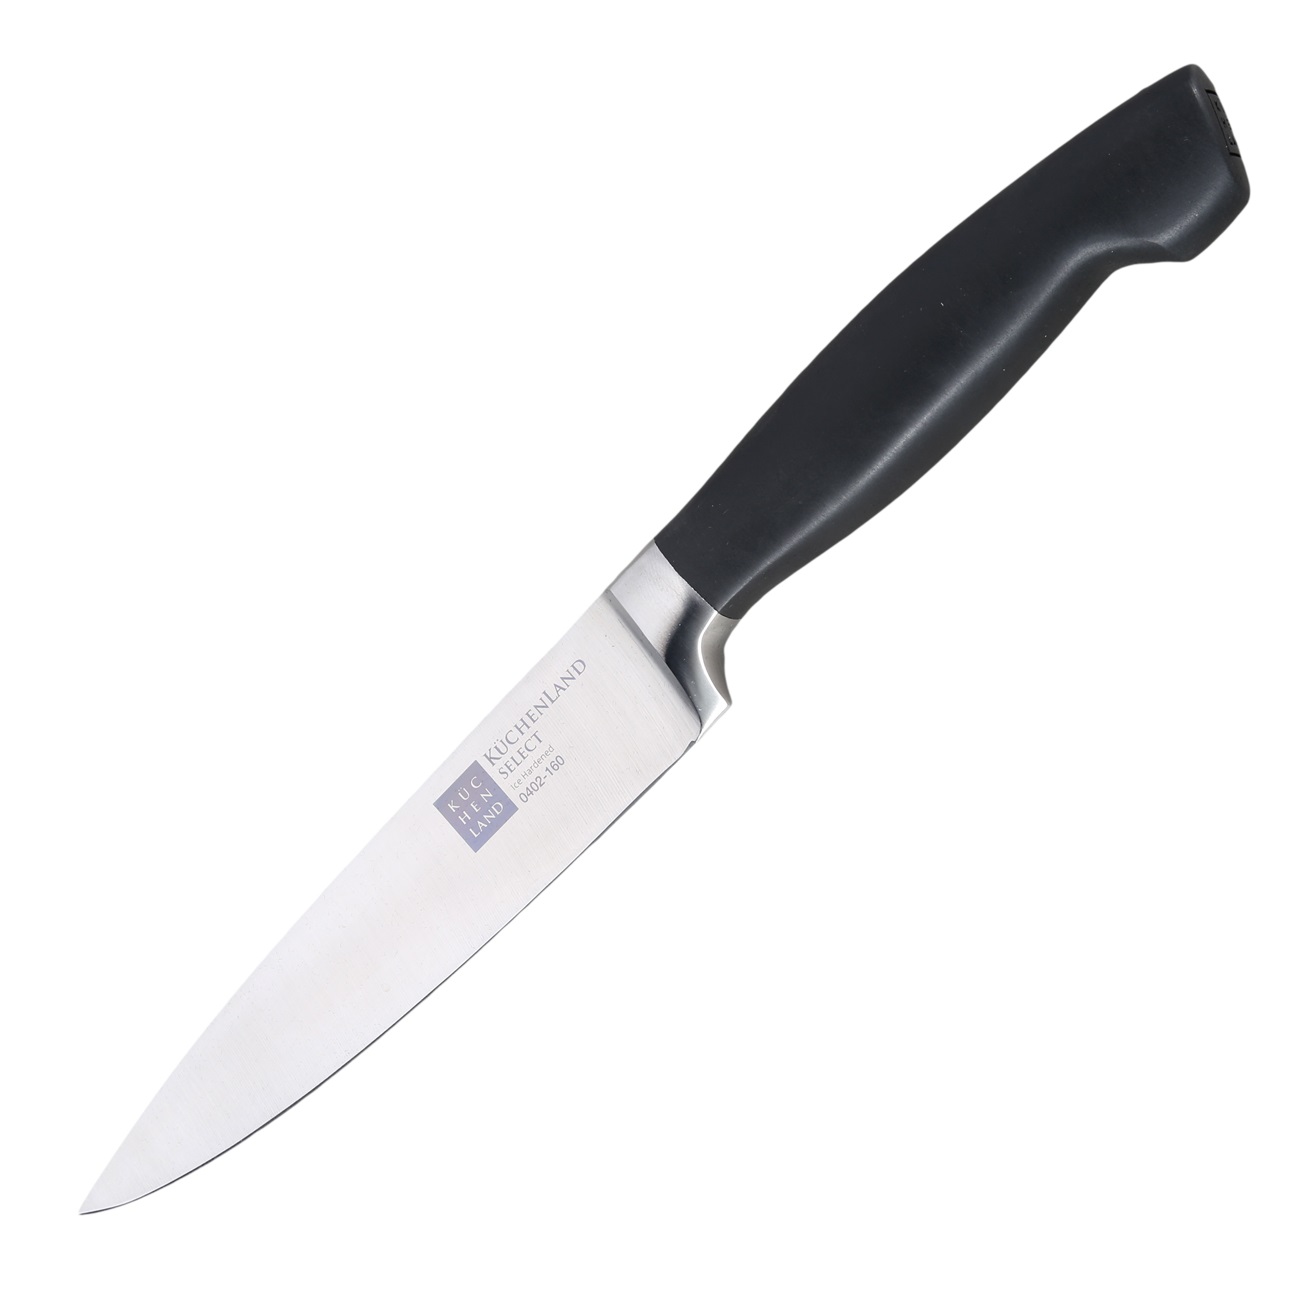 Carving knife, 16 cm, Steel/Plastic, Choose изображение № 2